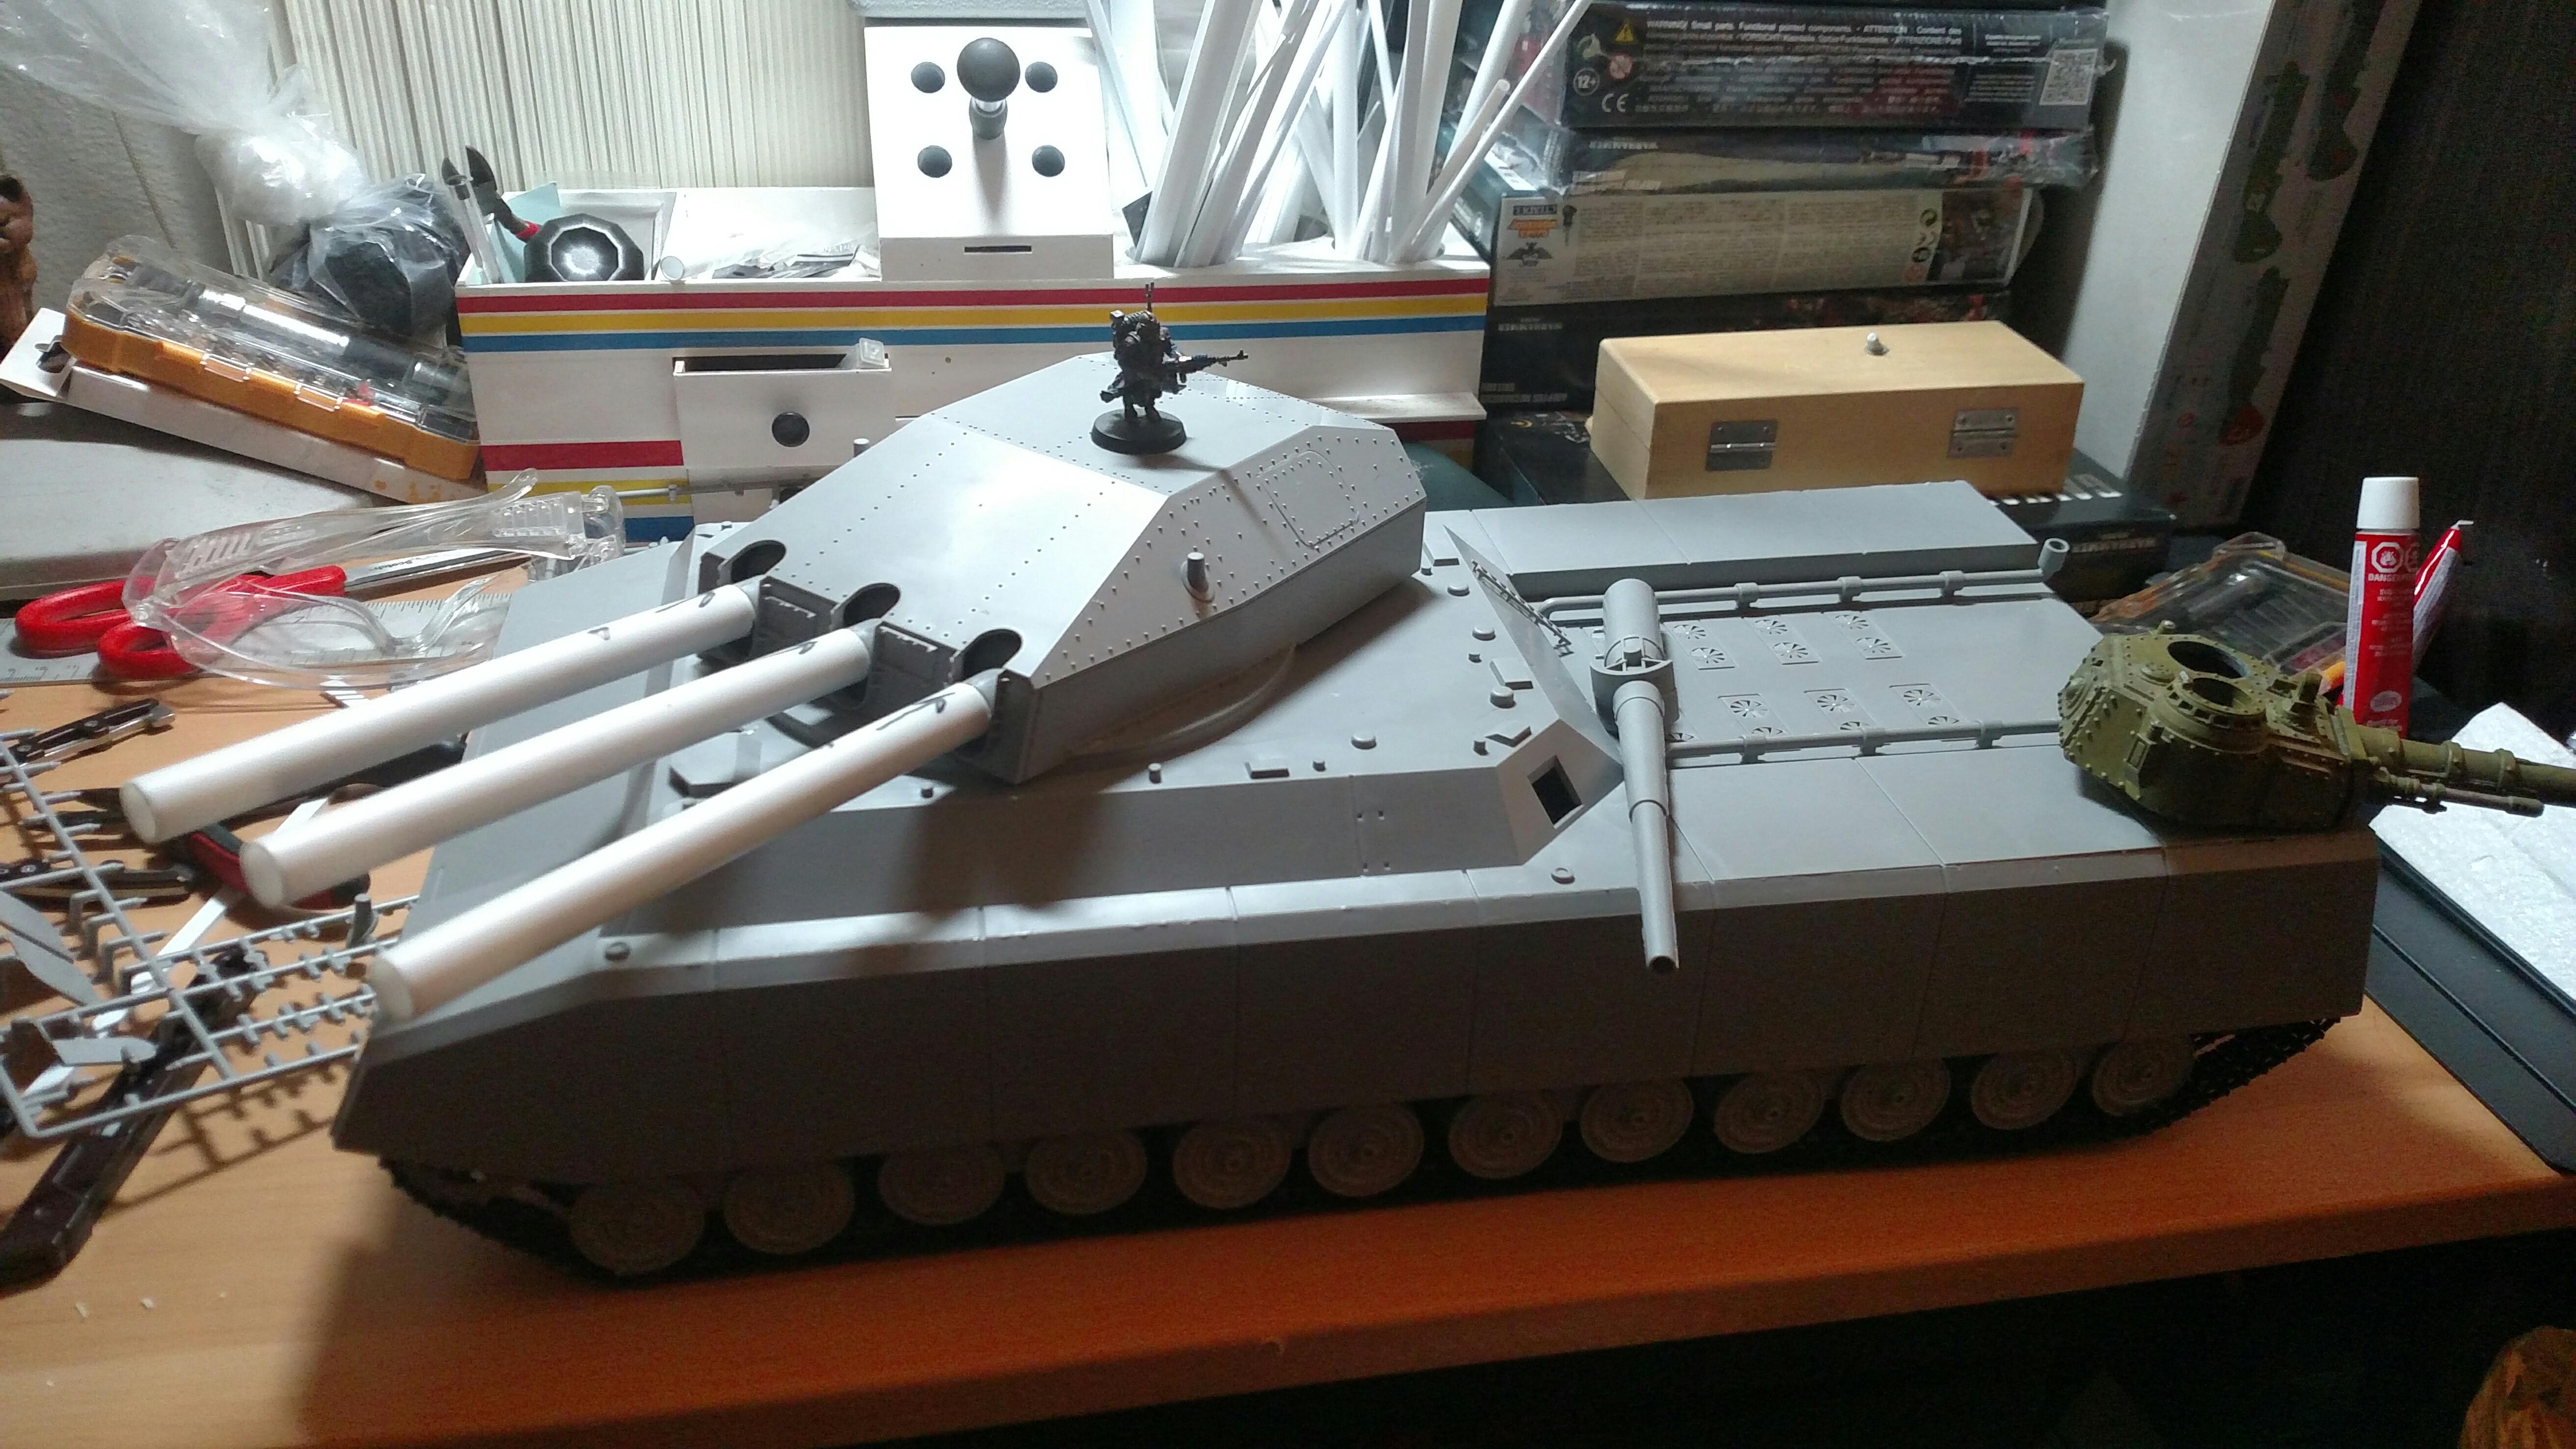 Tank 1000. P1000 Ratte. Танк p1000 крыса. Land Cruiser p1000 Ratte. Модель танка Landkreuzer p.1000 Ratte.